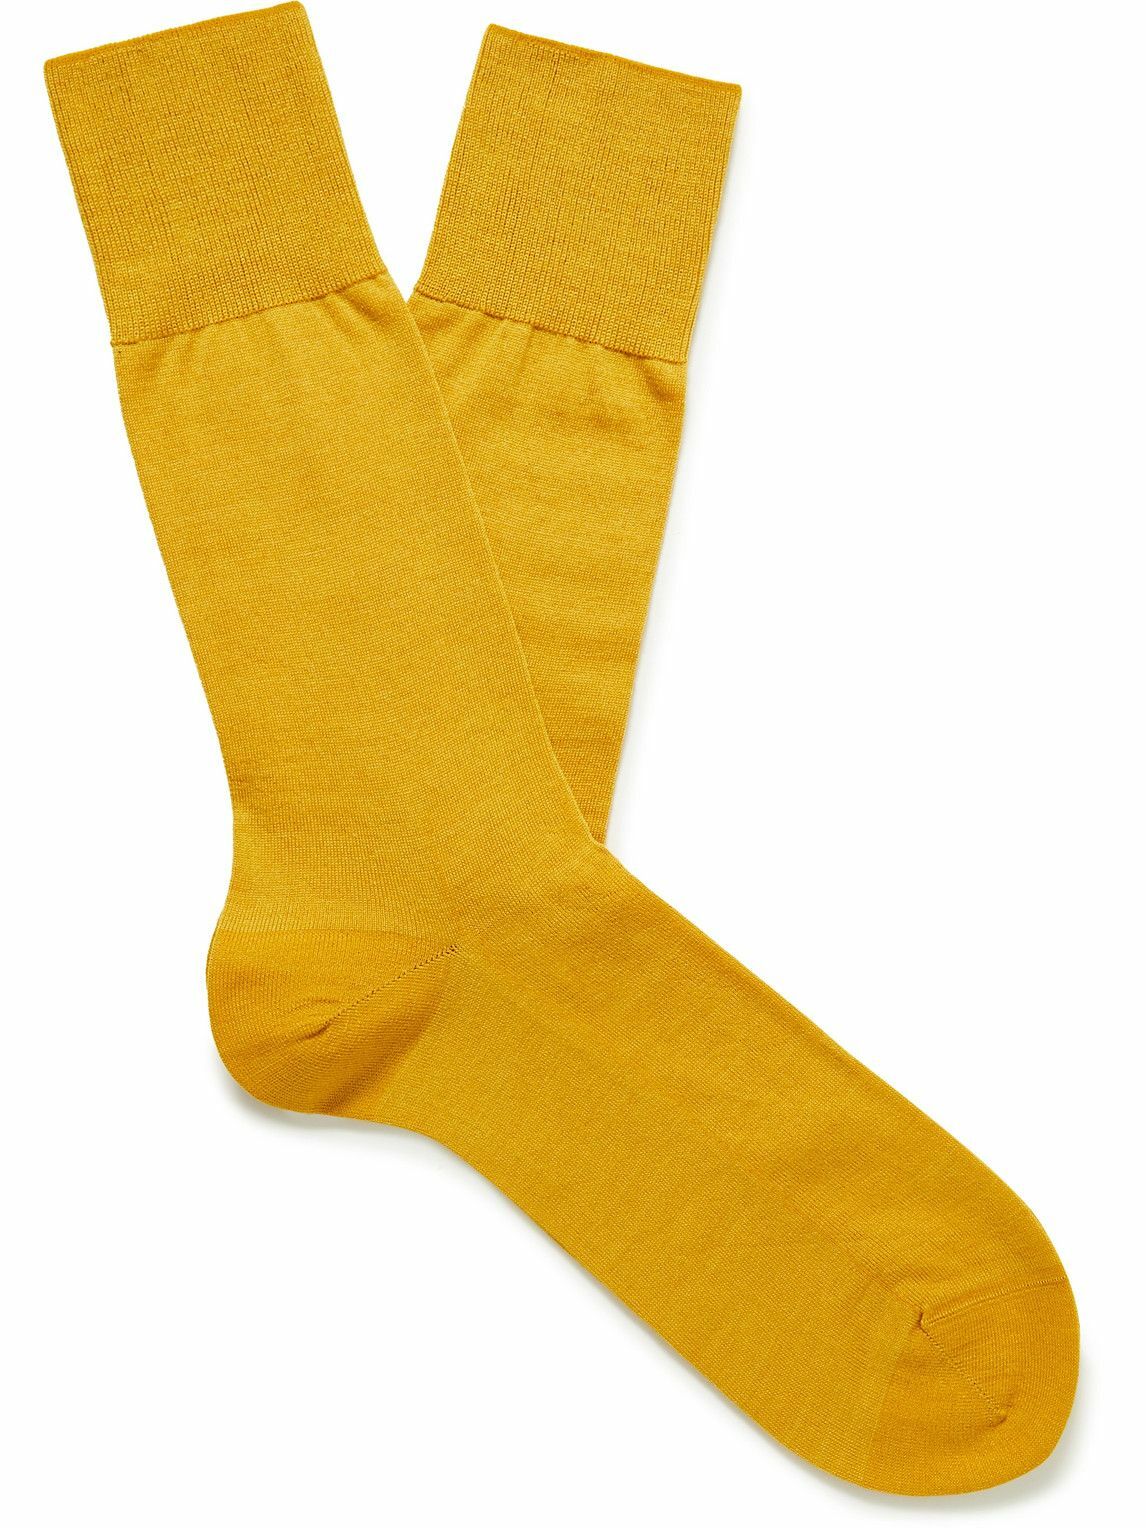 Falke - No 6 Merino Wool-Blend Socks - Yellow FALKE Ergonomic Sport System